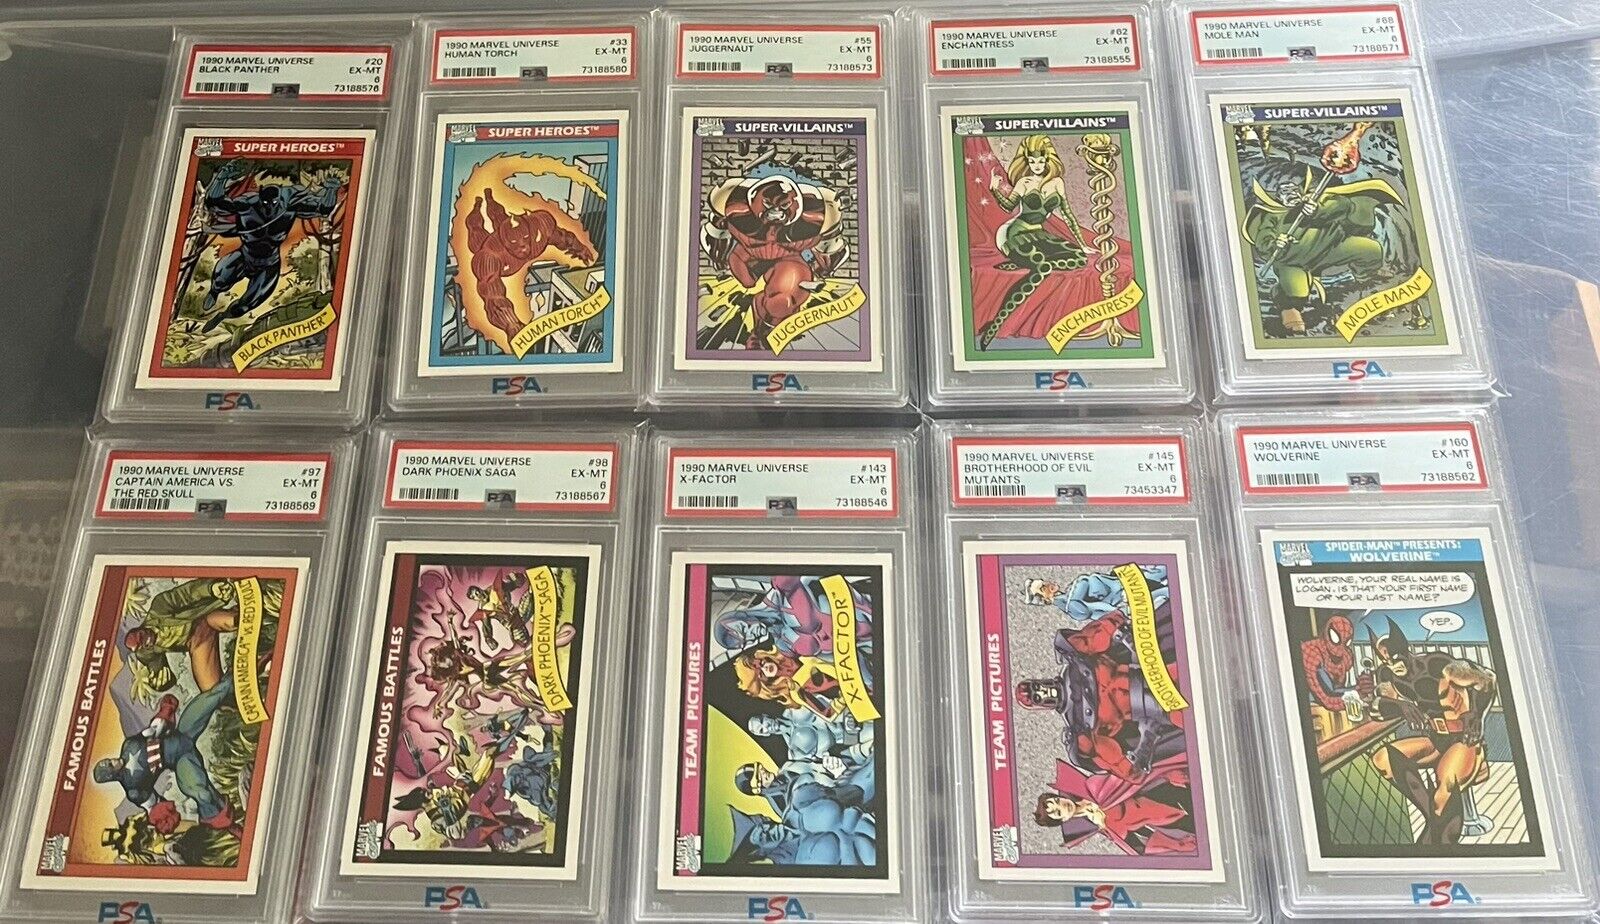 1990 Marvel Universe PSA 6 10-Card Lot - All EX/MT - Newly Graded - Nice Lot